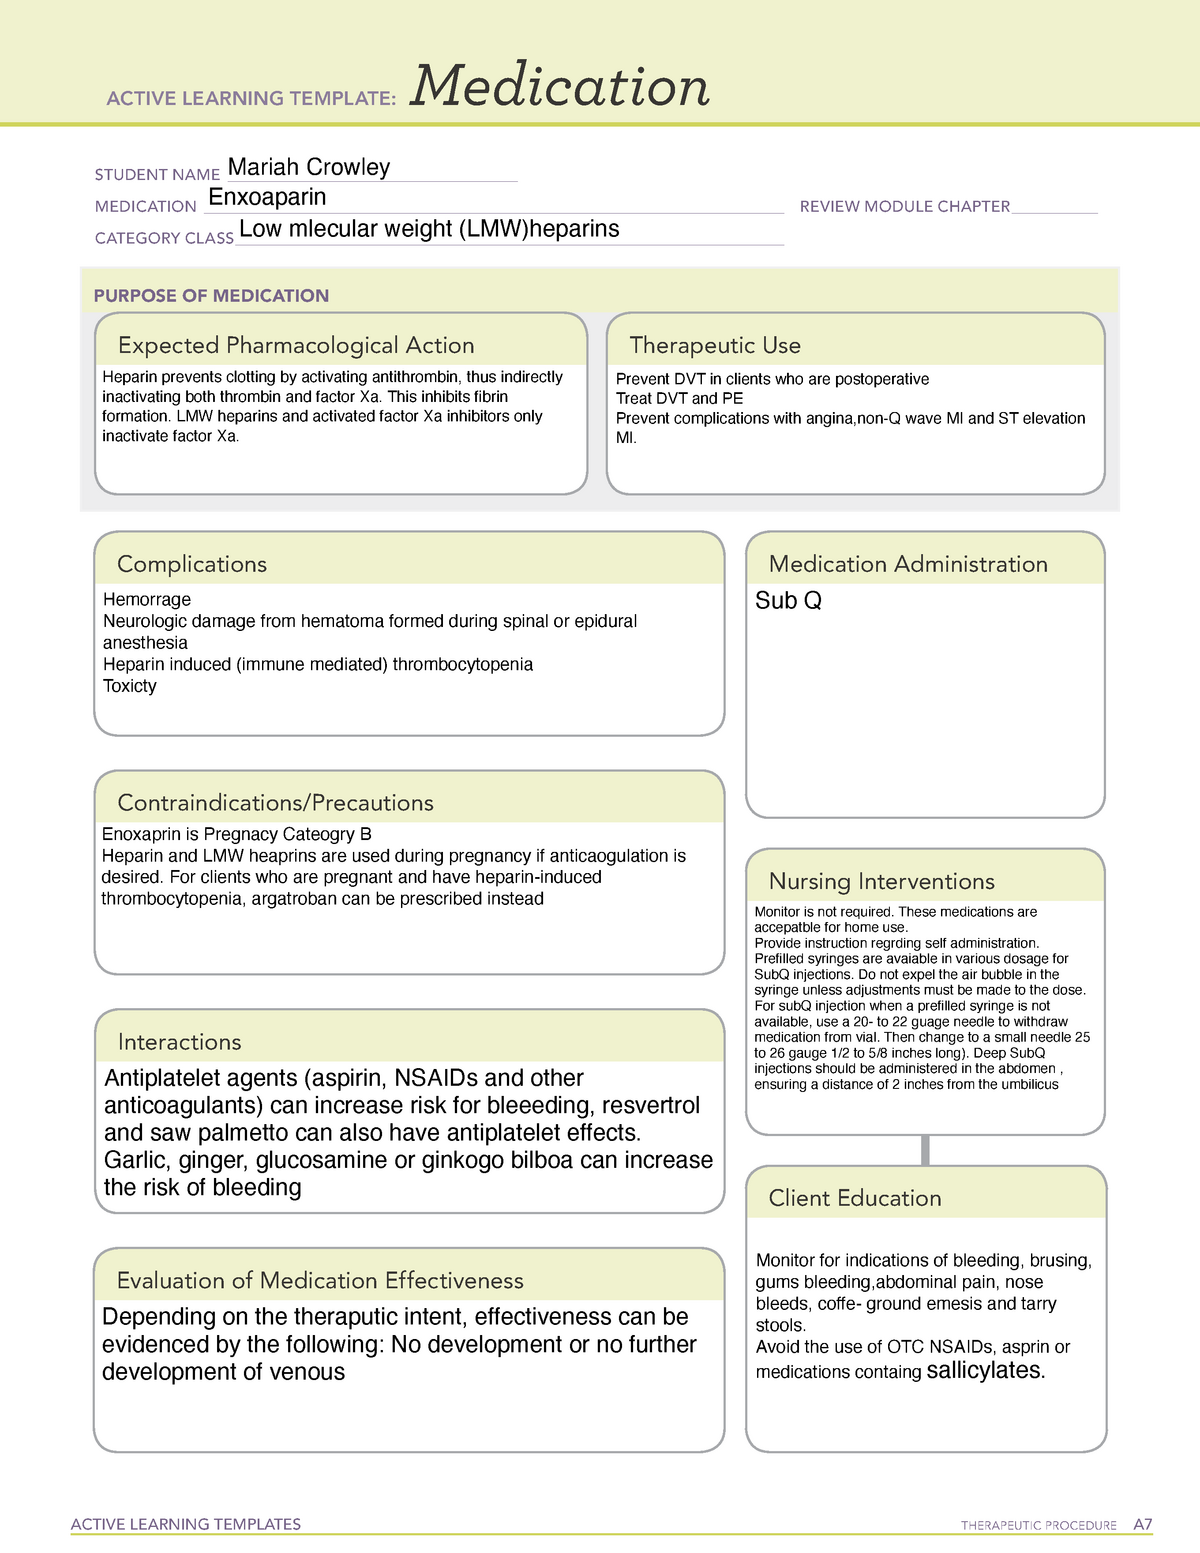 enxoaparin-ati-medication-template-active-learning-templates